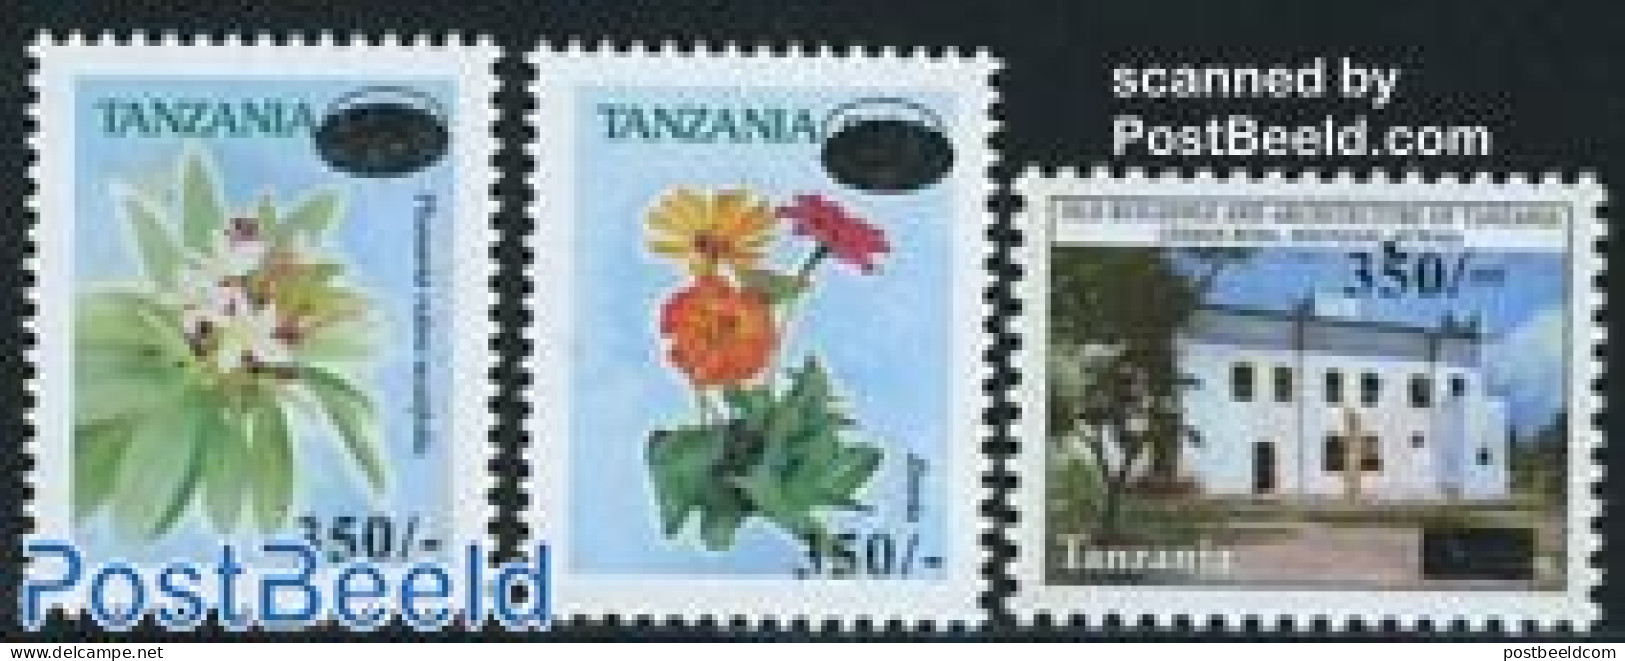 Tanzania 2007 Overprints 3v, Mint NH, Nature - Flowers & Plants - Tanzanie (1964-...)